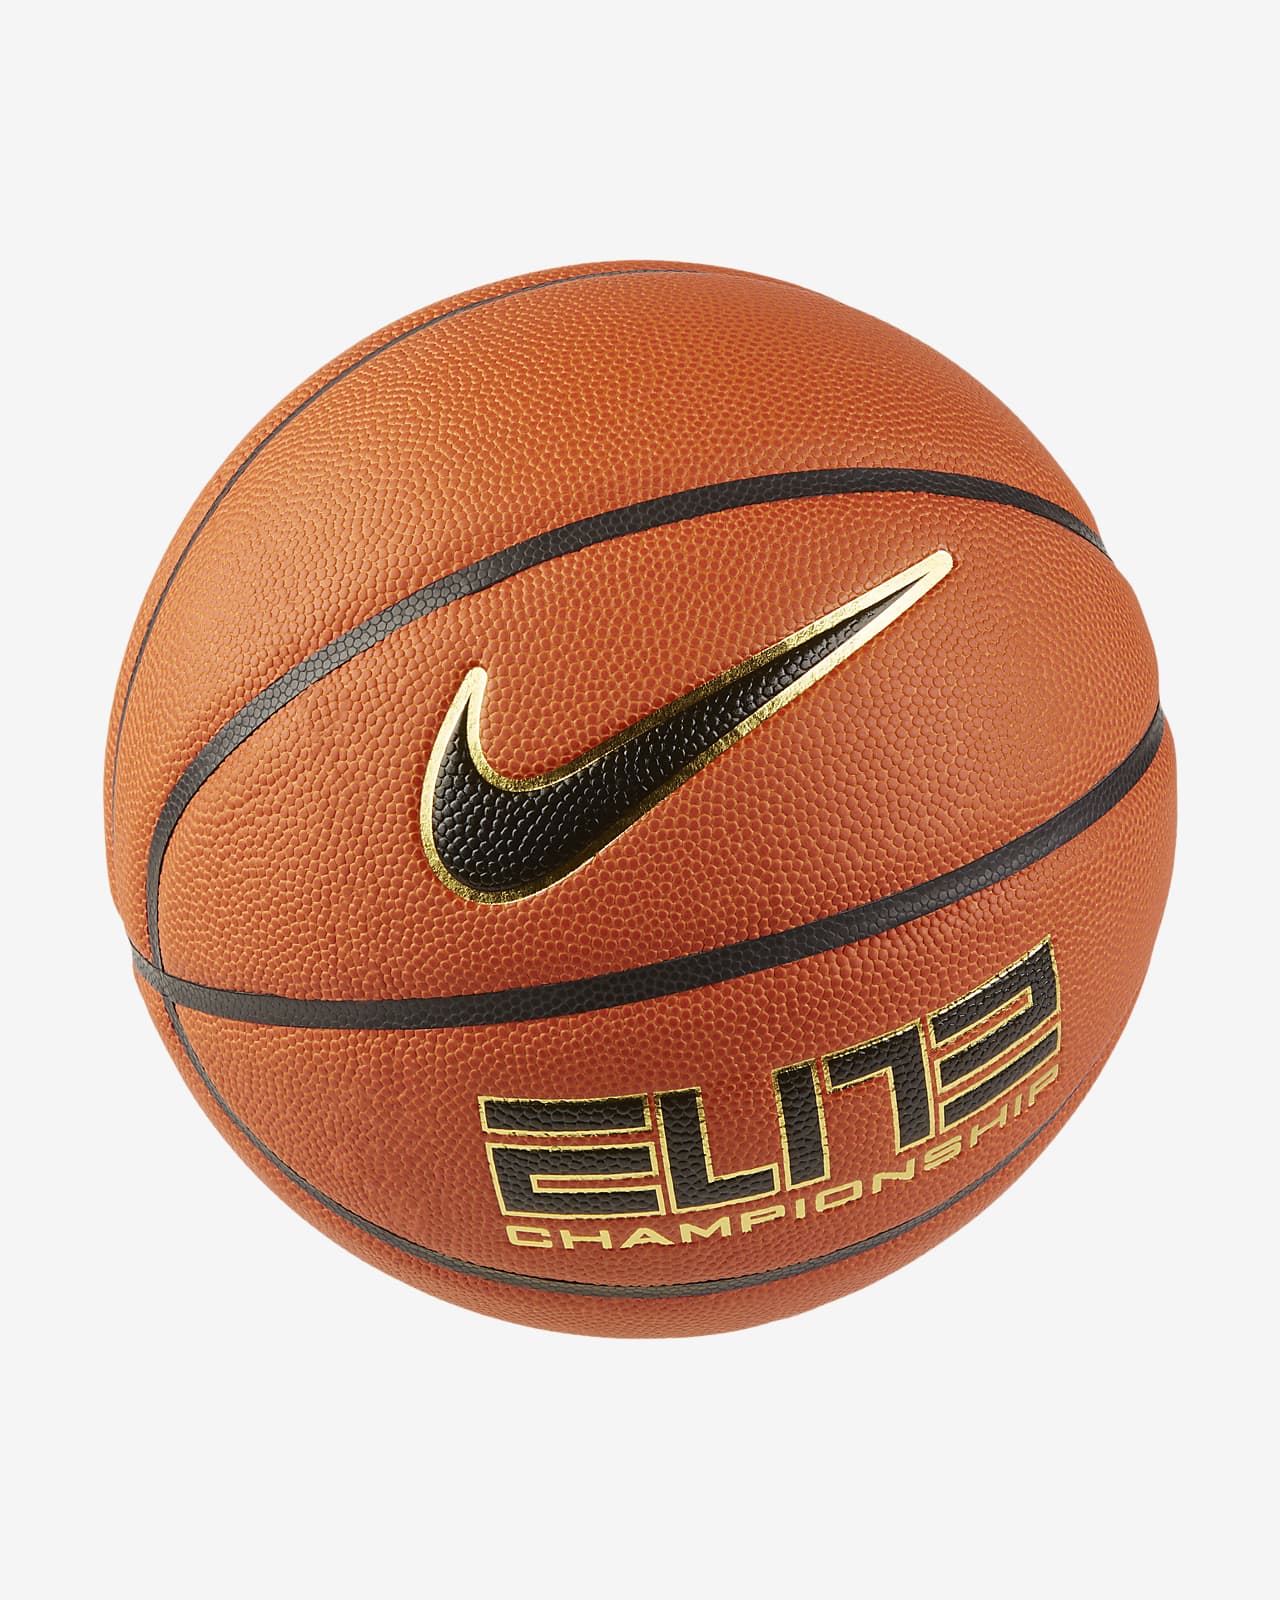 Elite Championship 8P de baloncesto. Nike ES